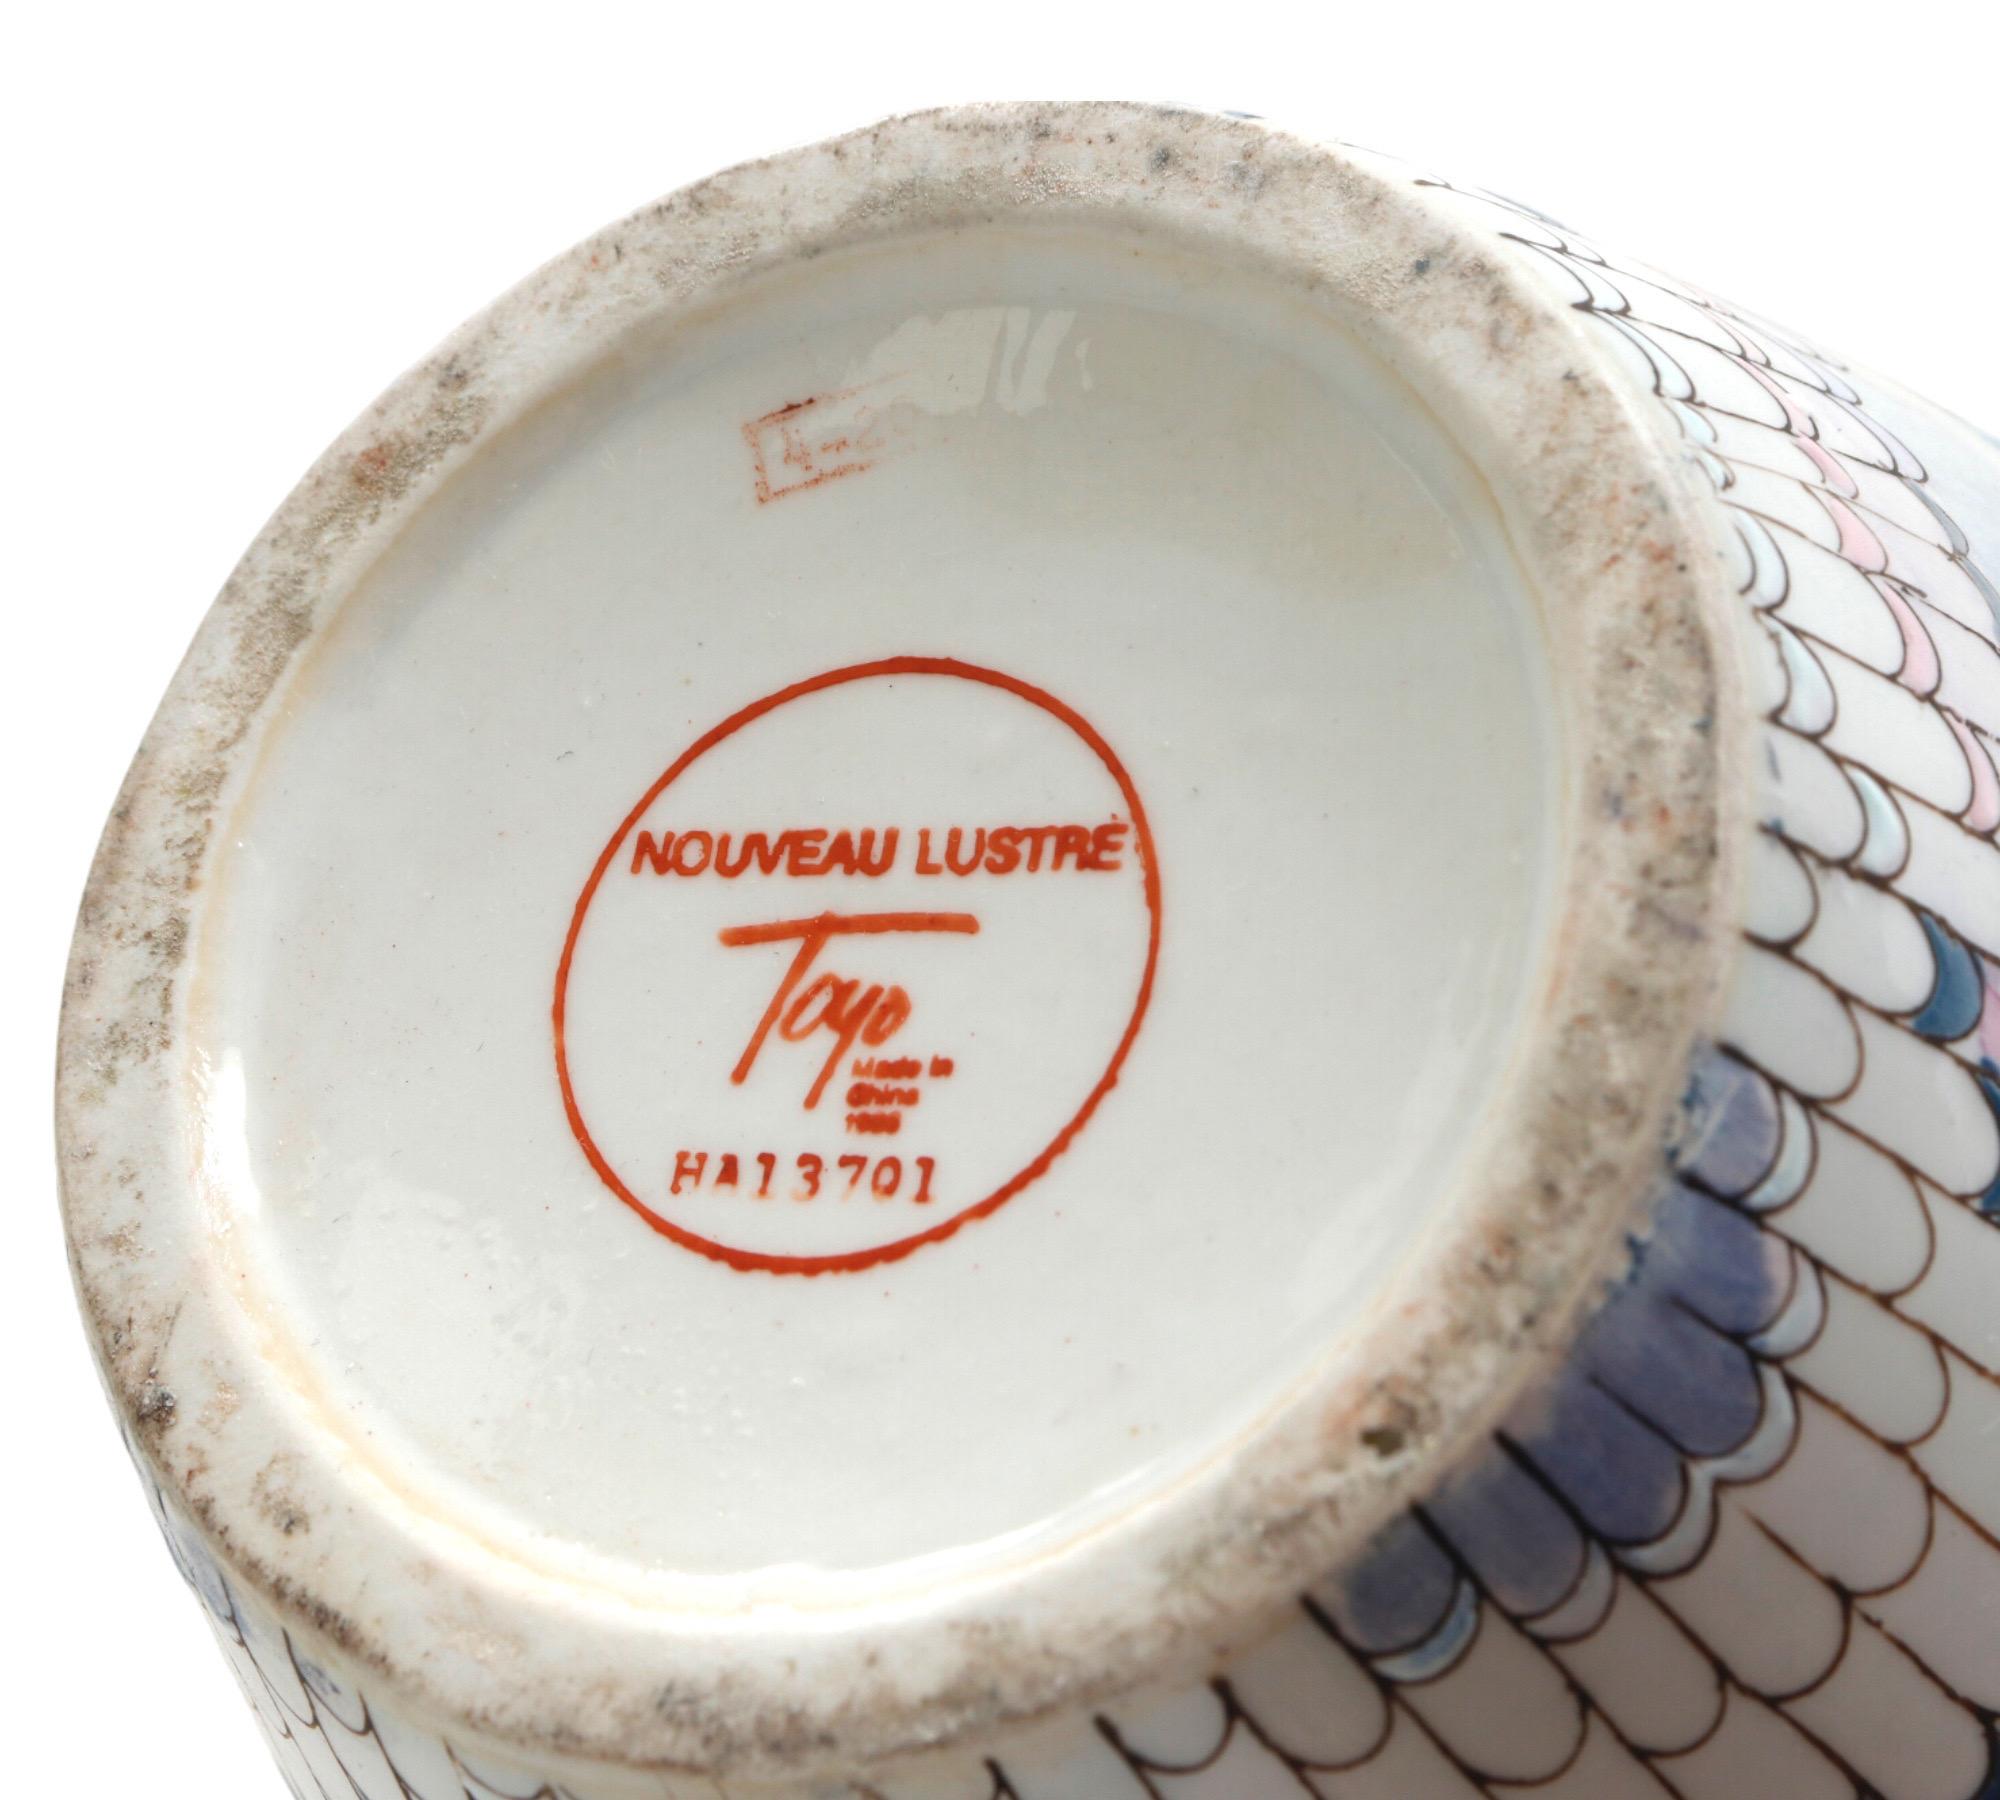 Late 20th Century Nouveau Lustre Ceramic Vase by Toyo For Sale